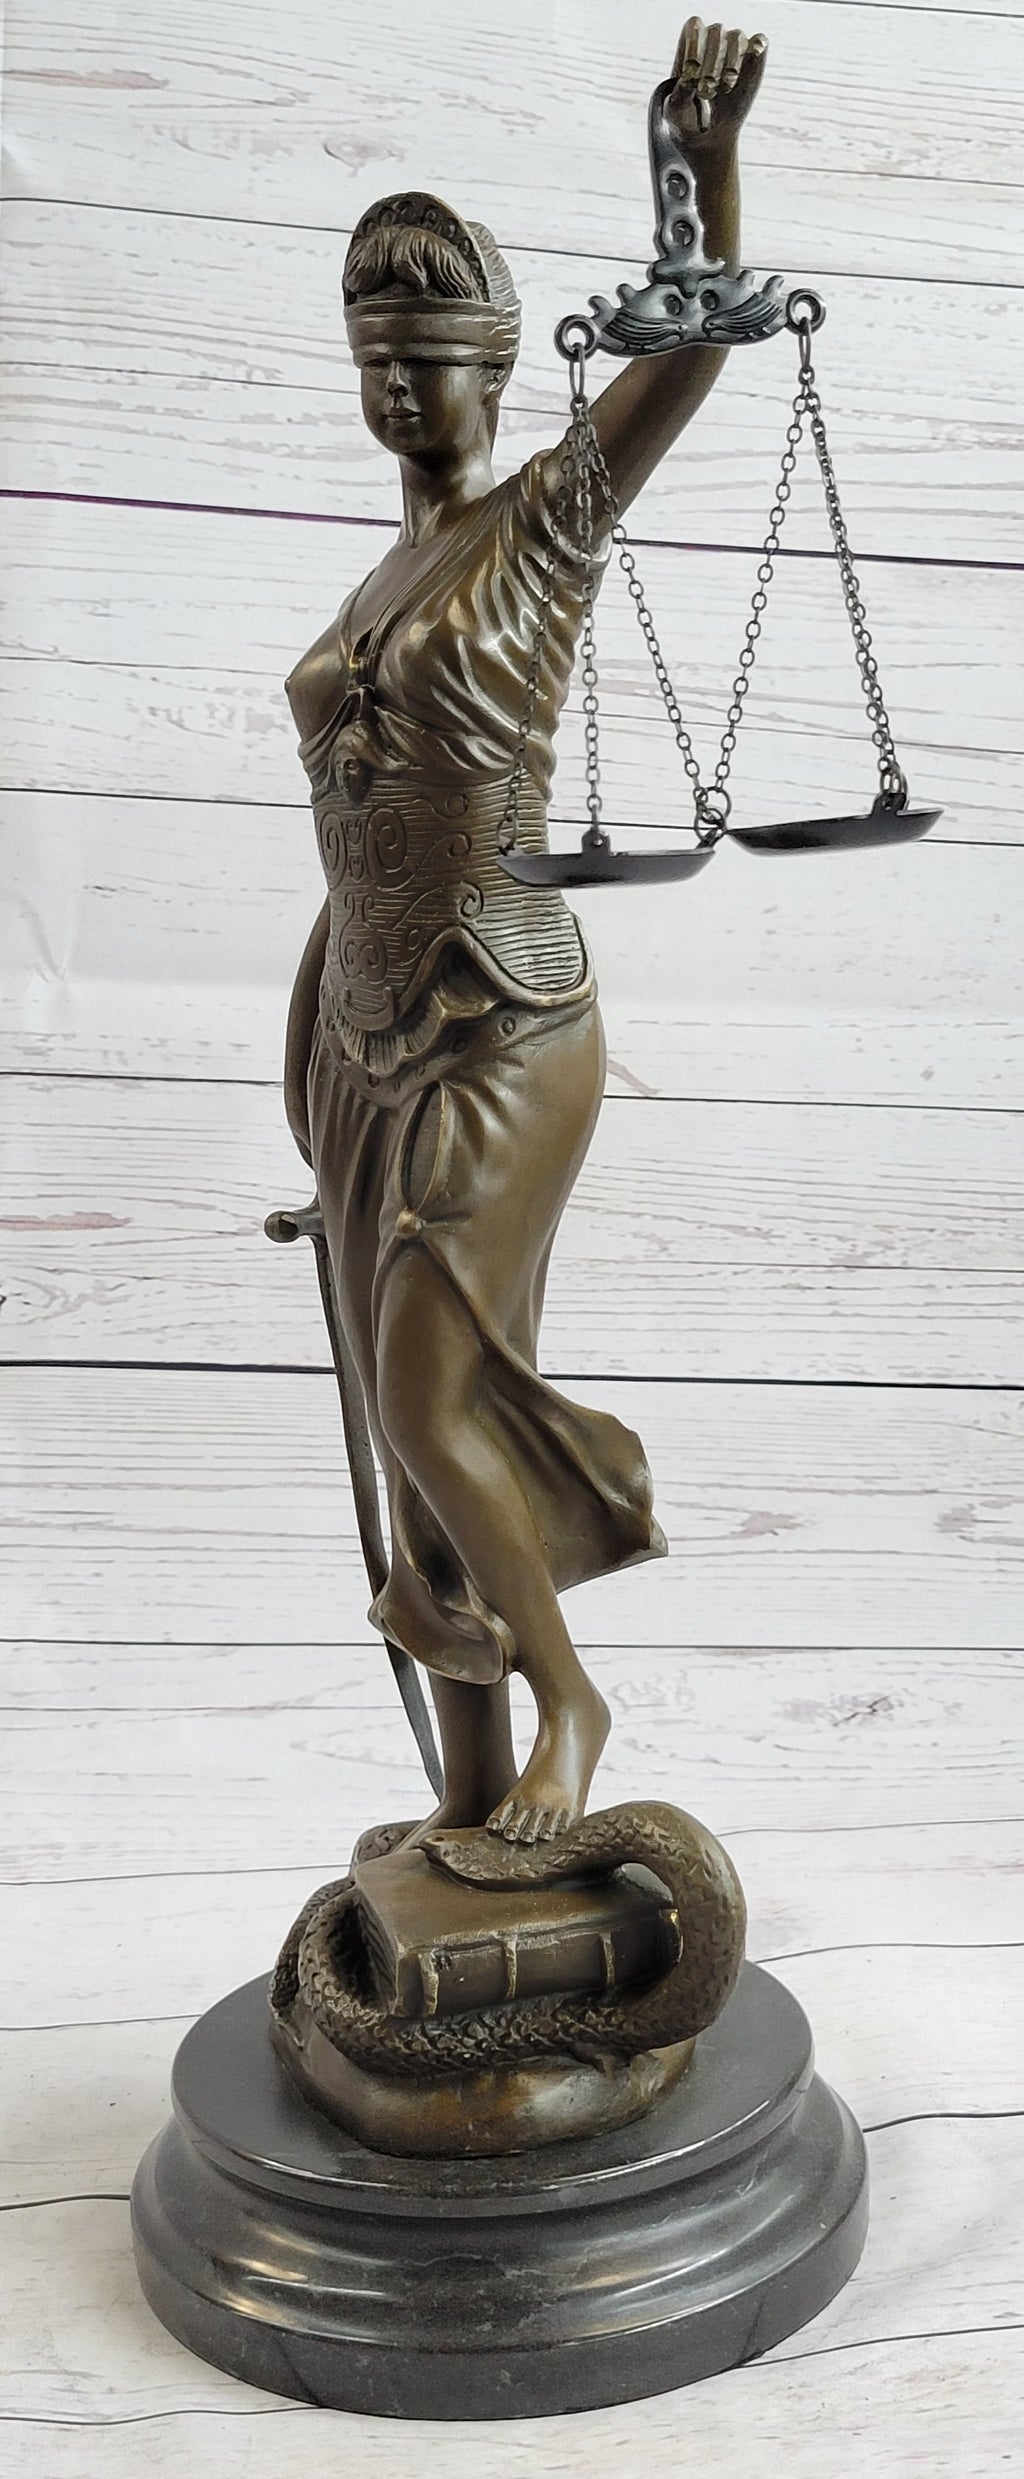 Bronzed Cast Iron Hand Statue with Black Finish